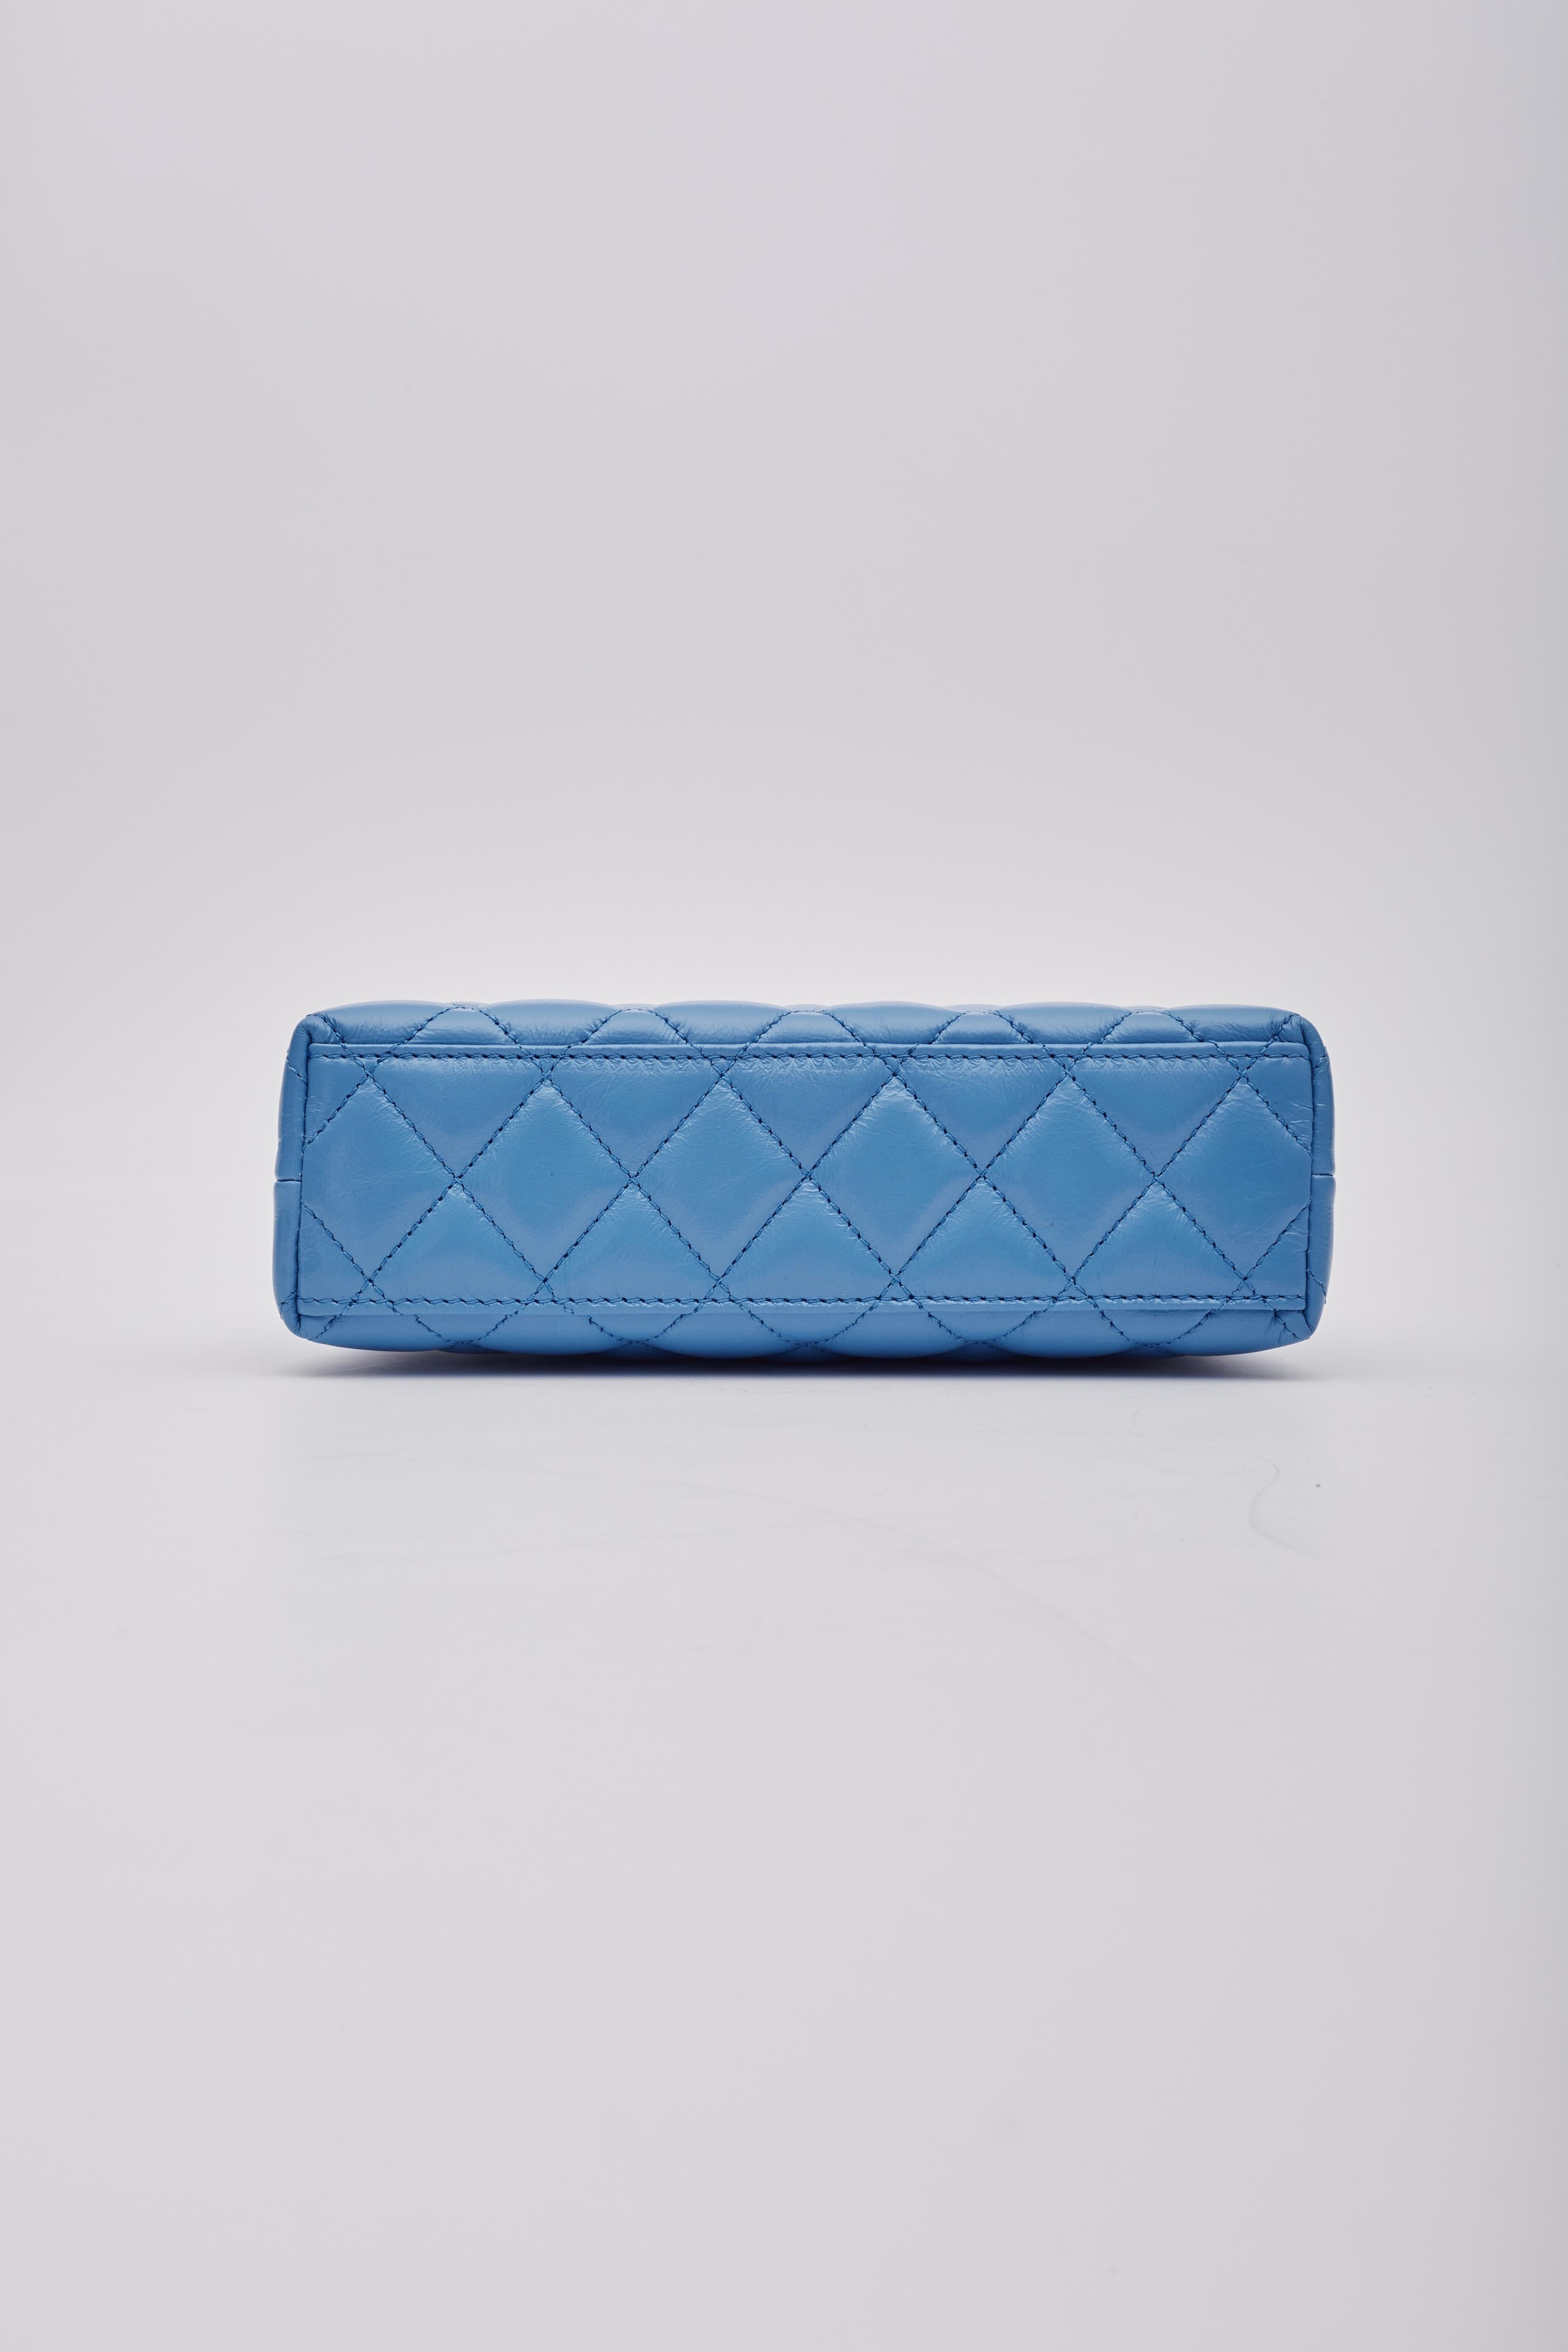 Chanel Blue Calfskin Mini Shopping Kelly Bag For Sale 4